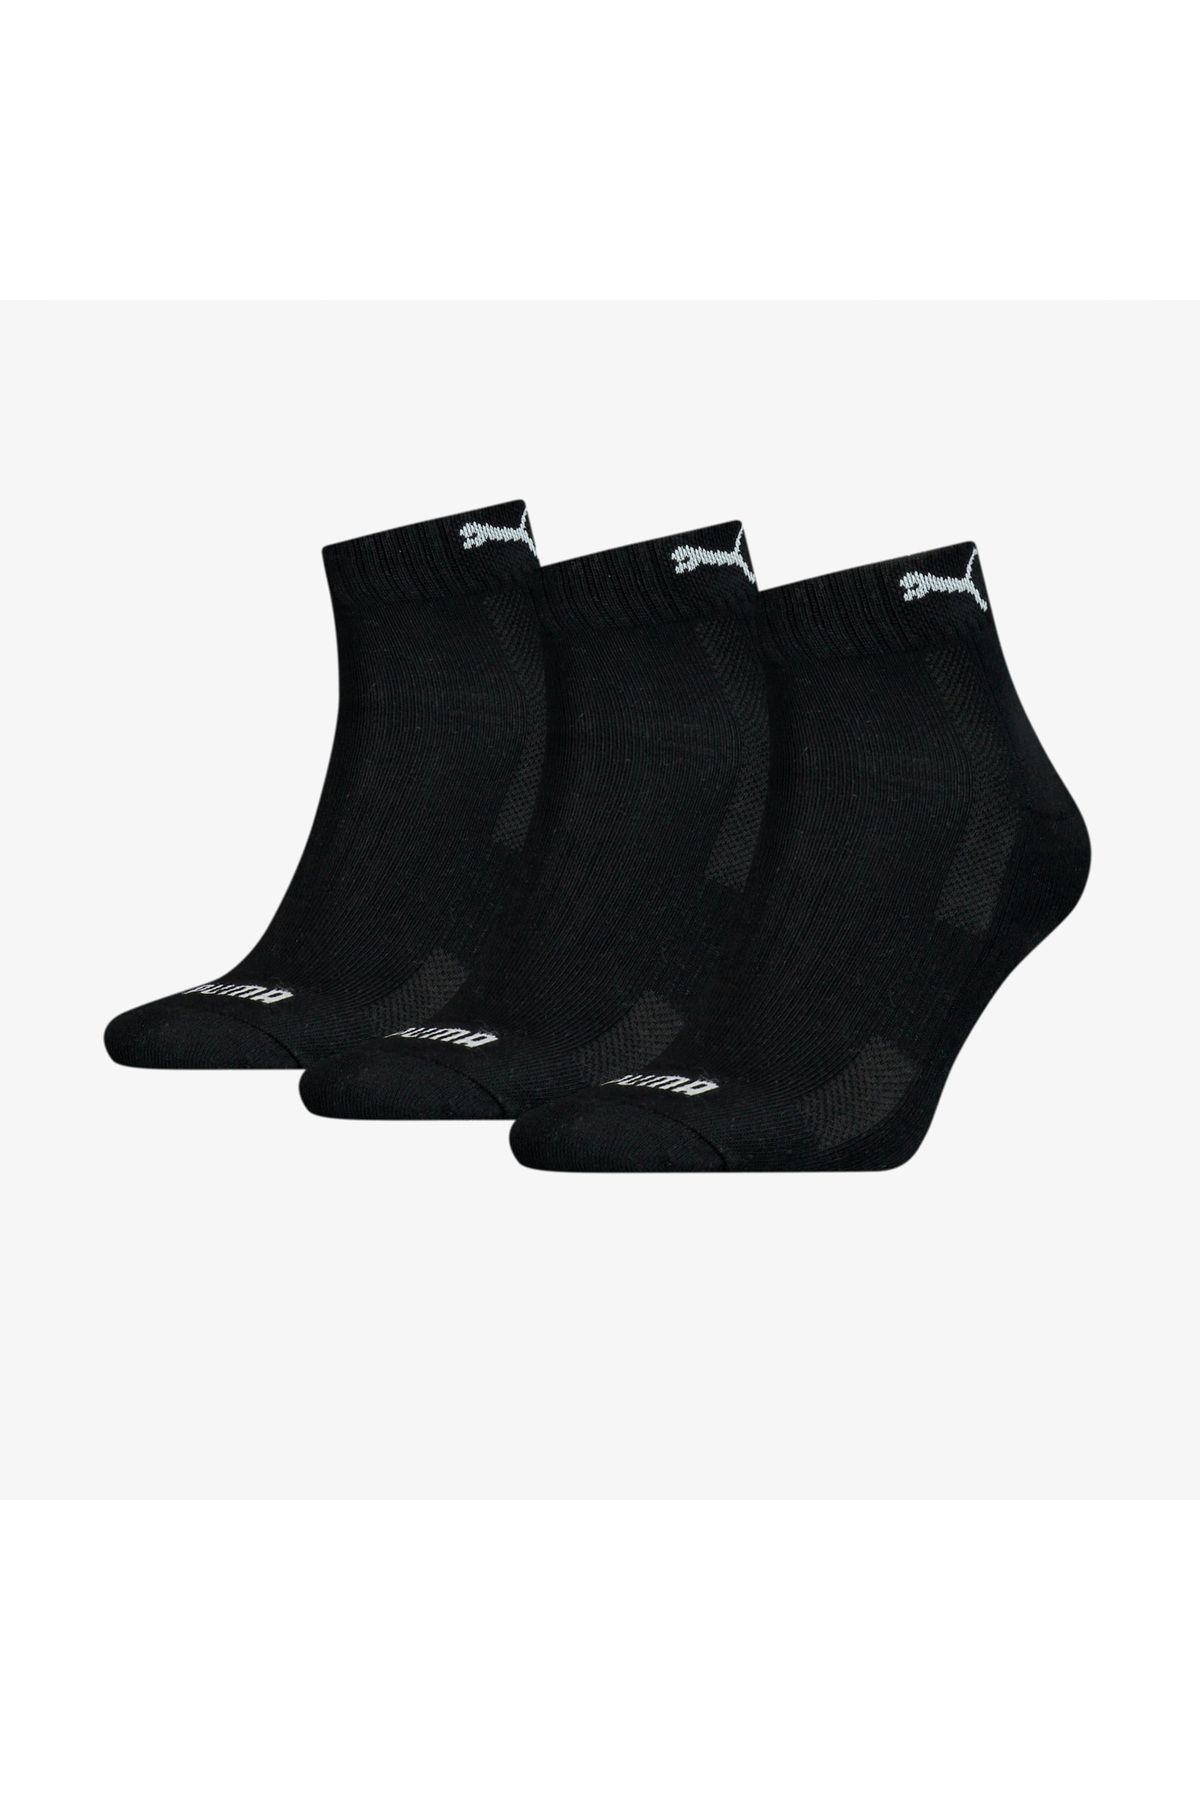 Puma Unisex Siyah 3'lü Çorap